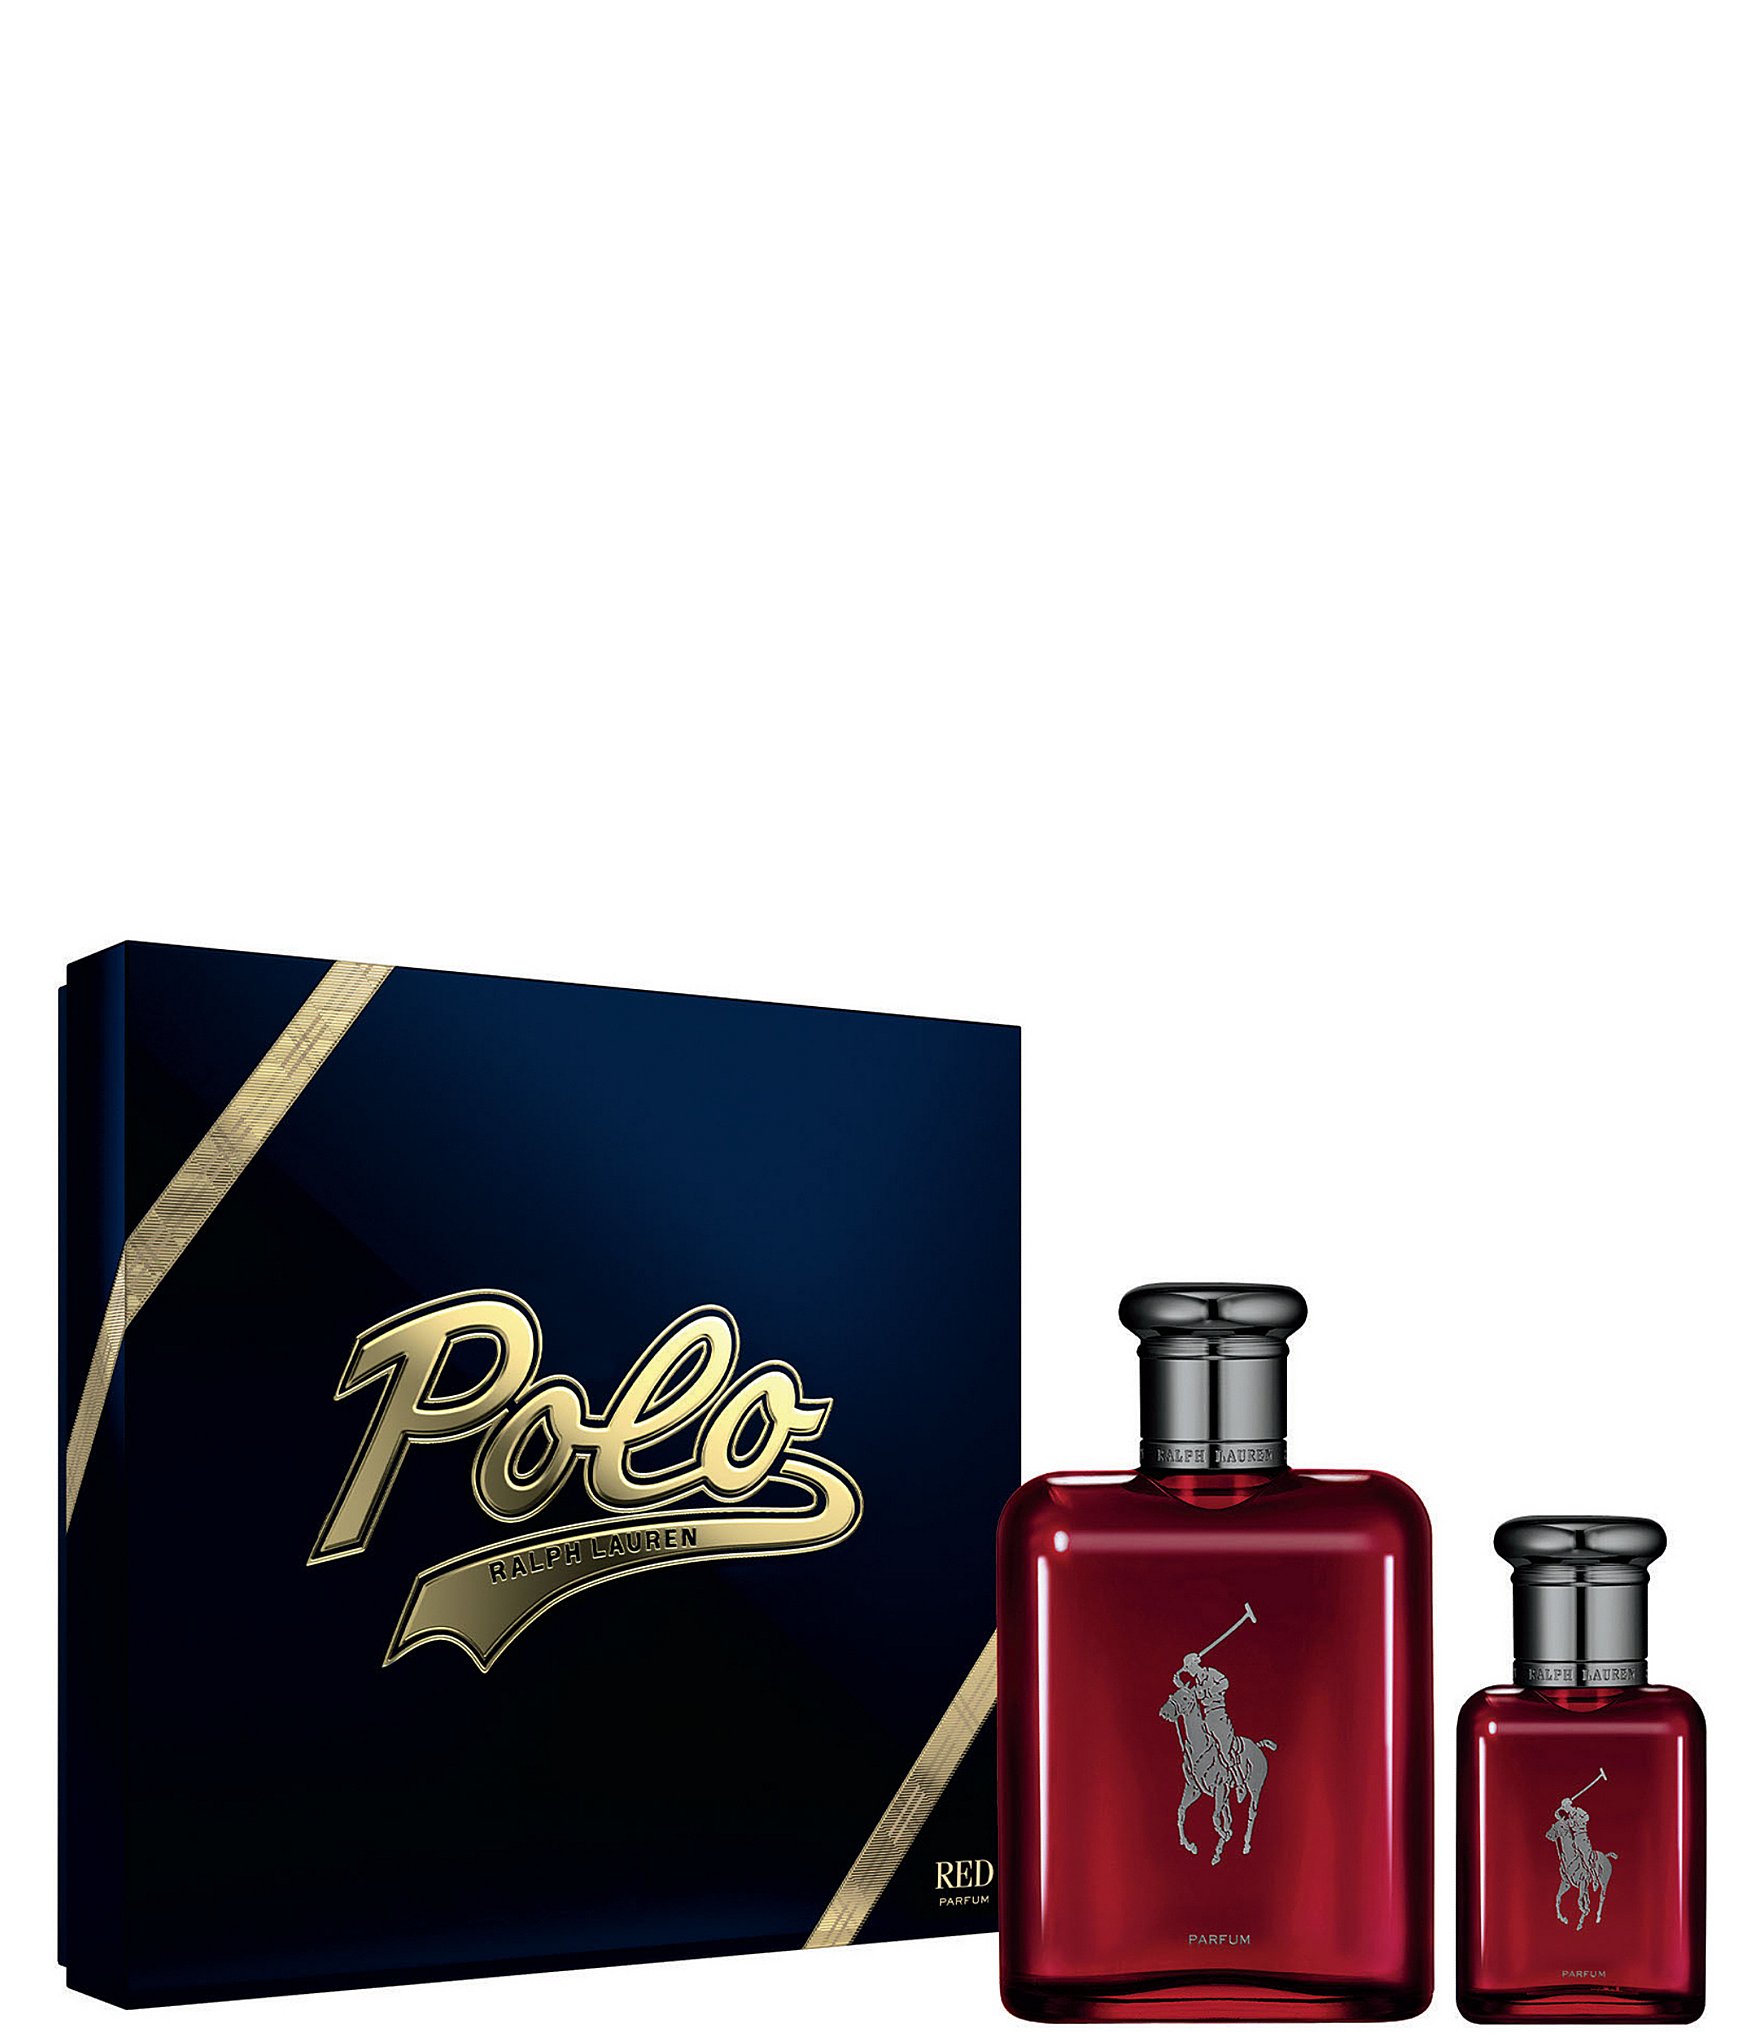 polo red: Fragrance, Perfume, & Cologne for Women & Men